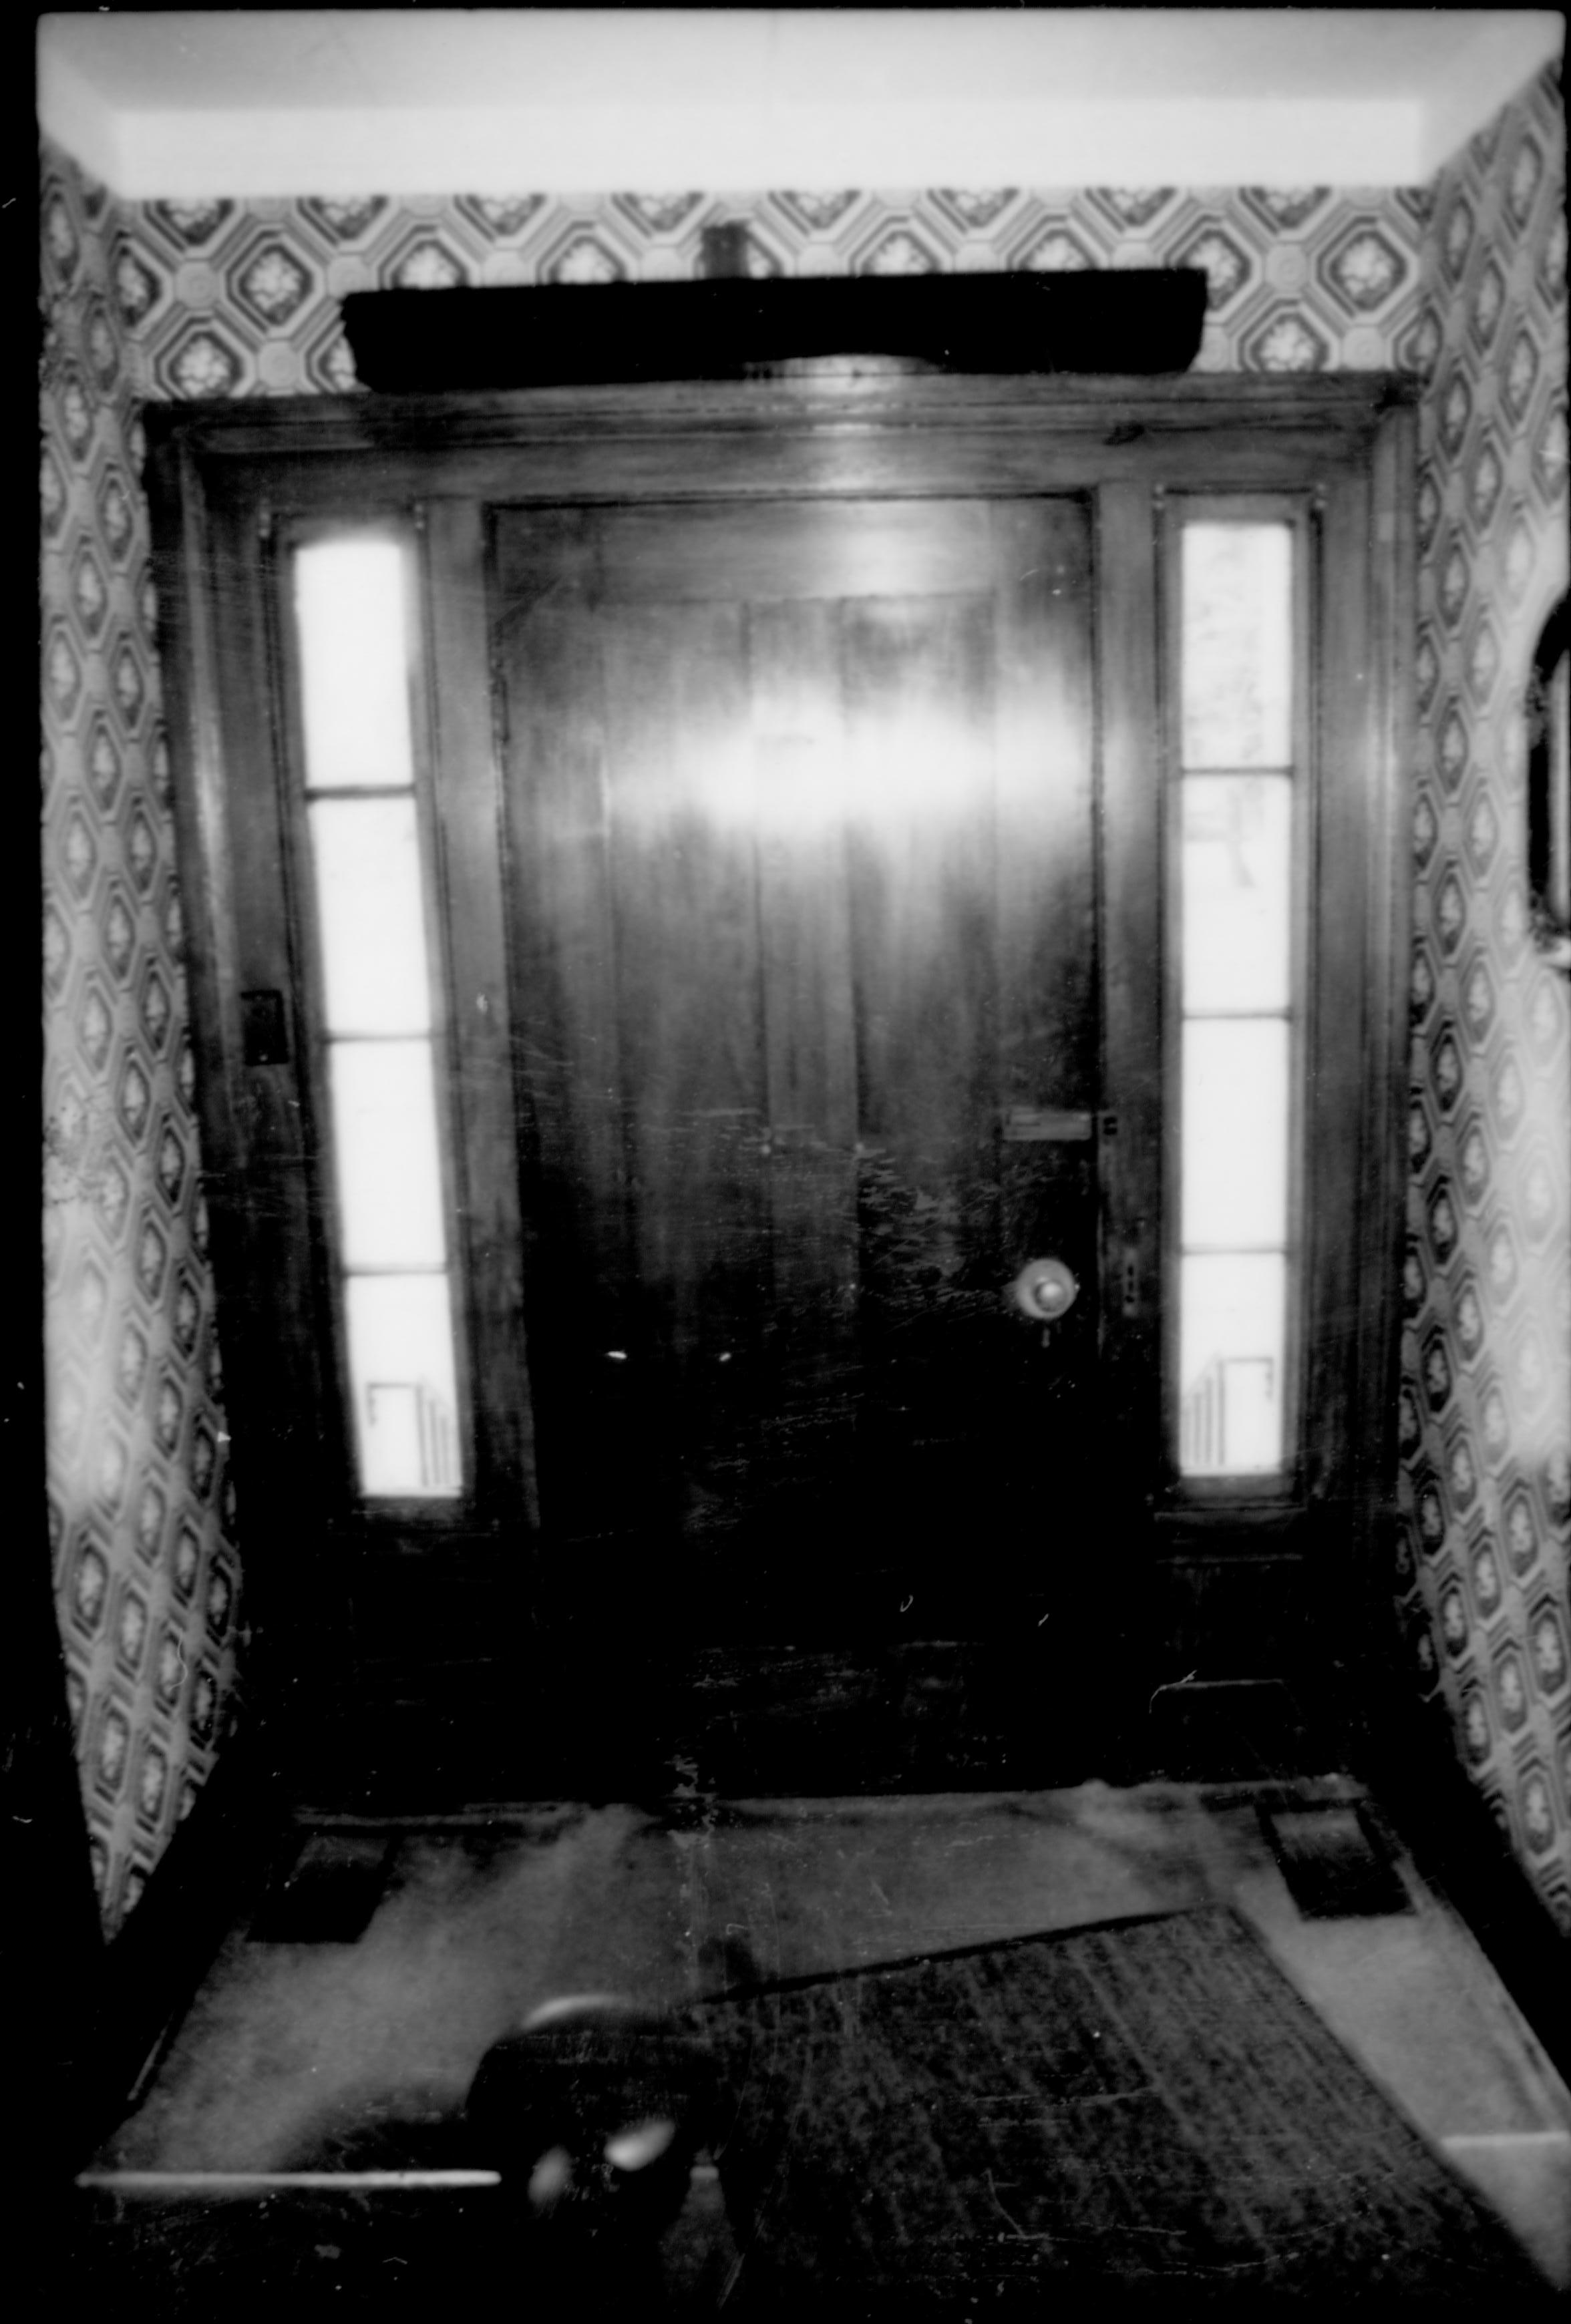 NA Lincoln, Home, Restoration, Interior Front Door